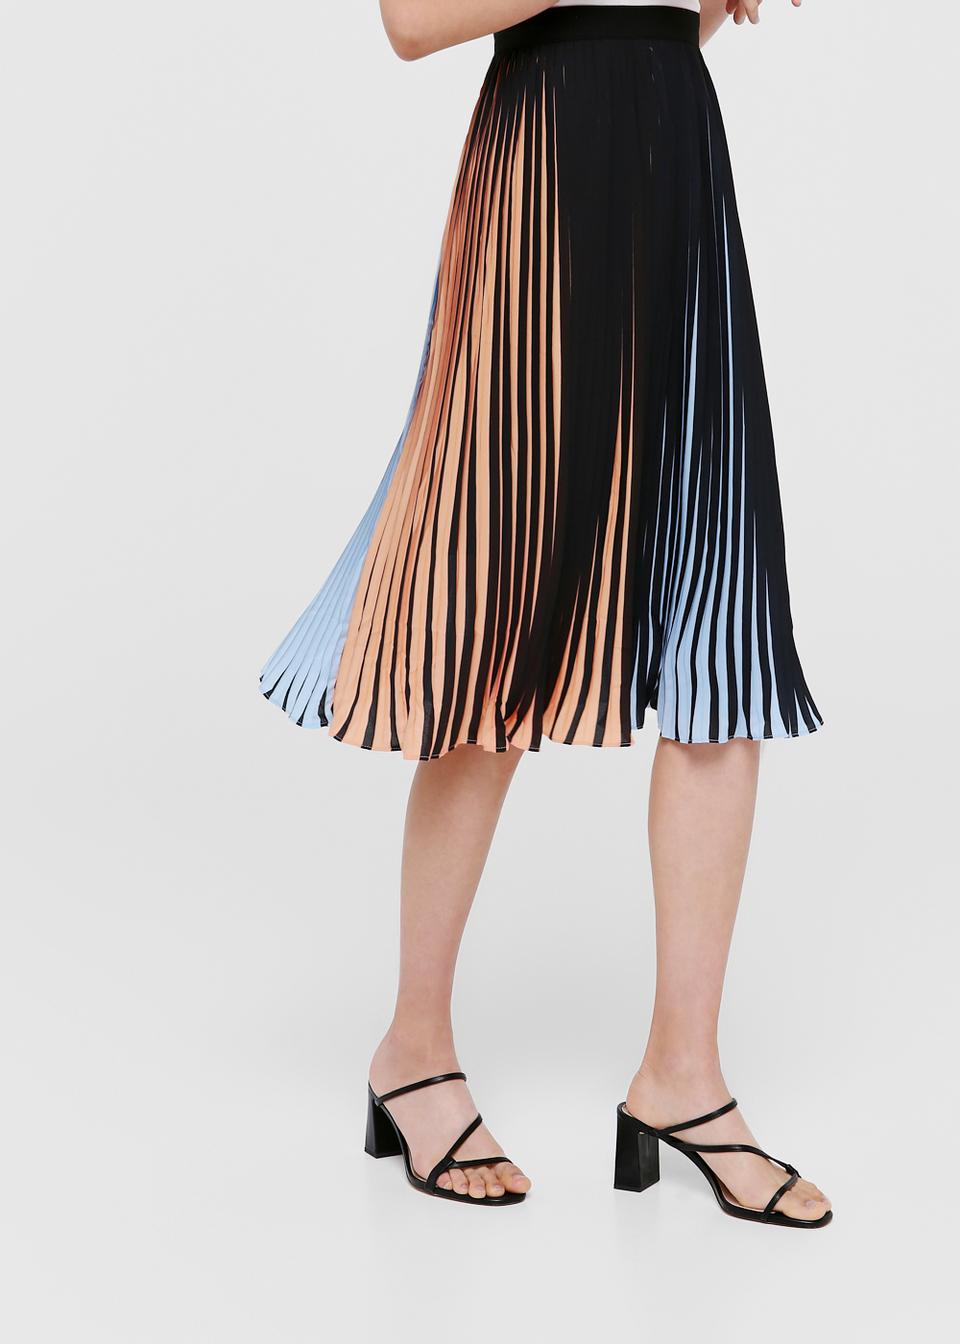 Buy Jasmine Pleated A-line Midi Skirt @ Love, Bonito Singapore | Shop ...